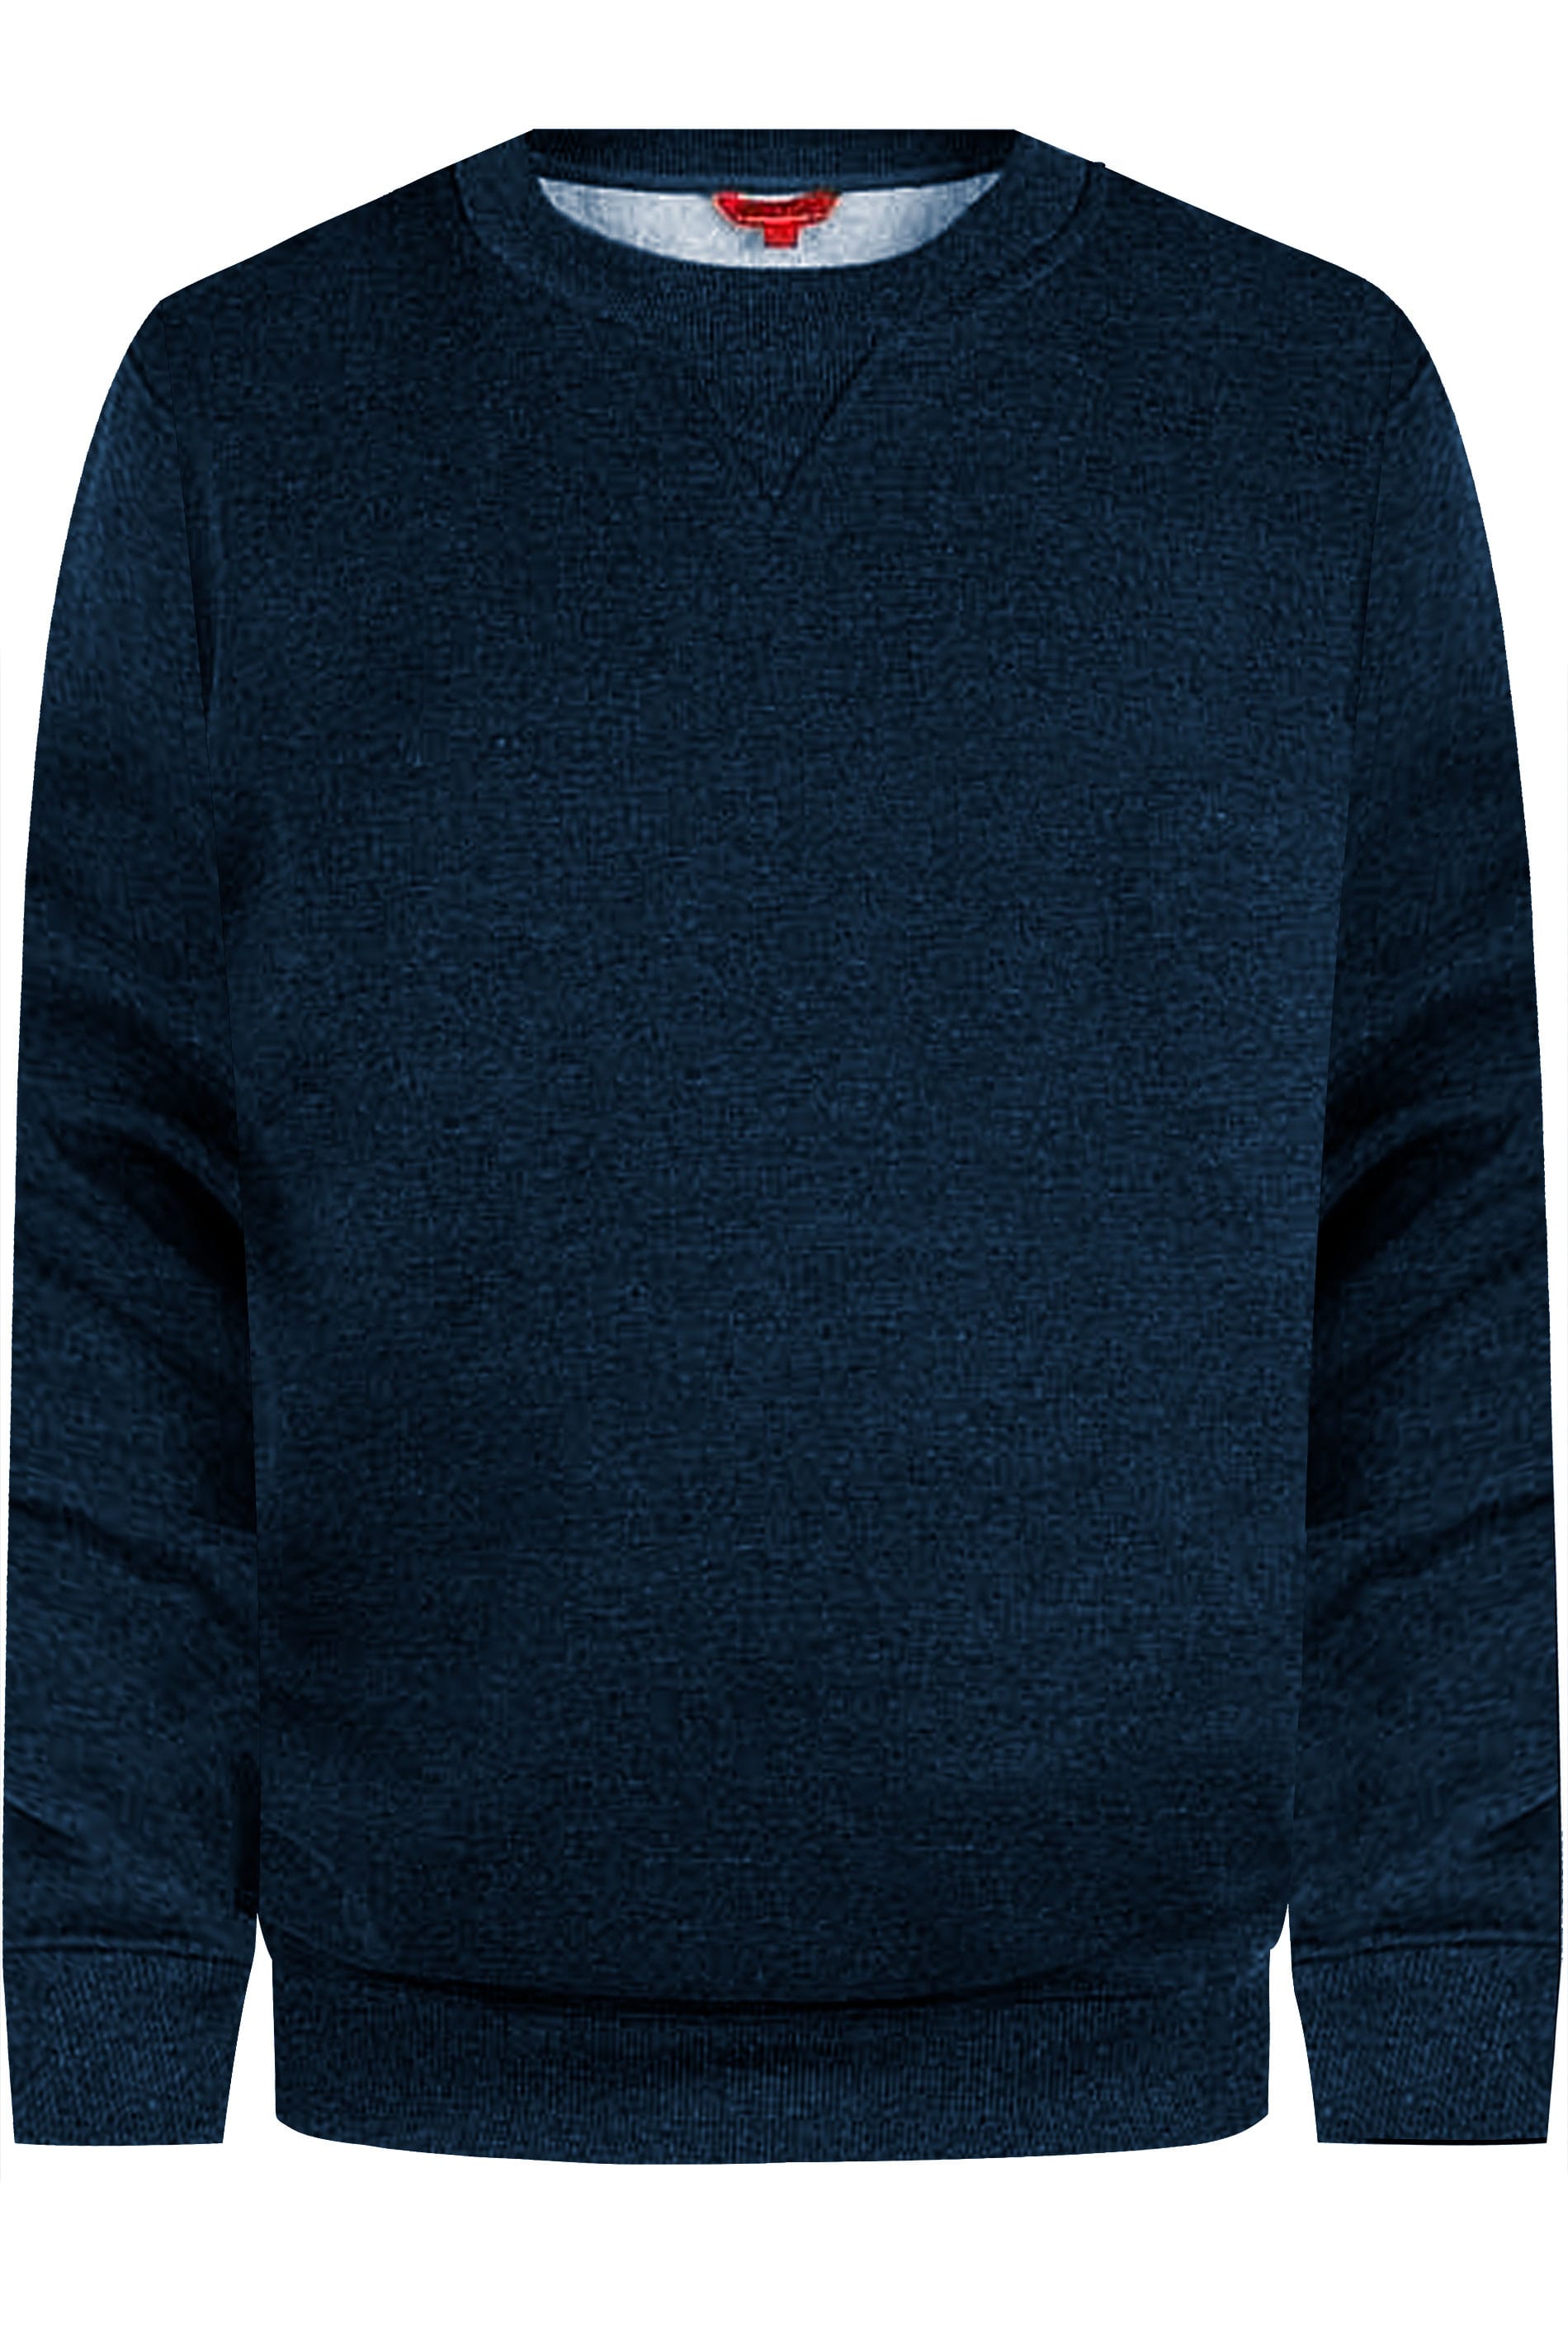 D555 Rockford Navy Sweatshirt_638b.jpg